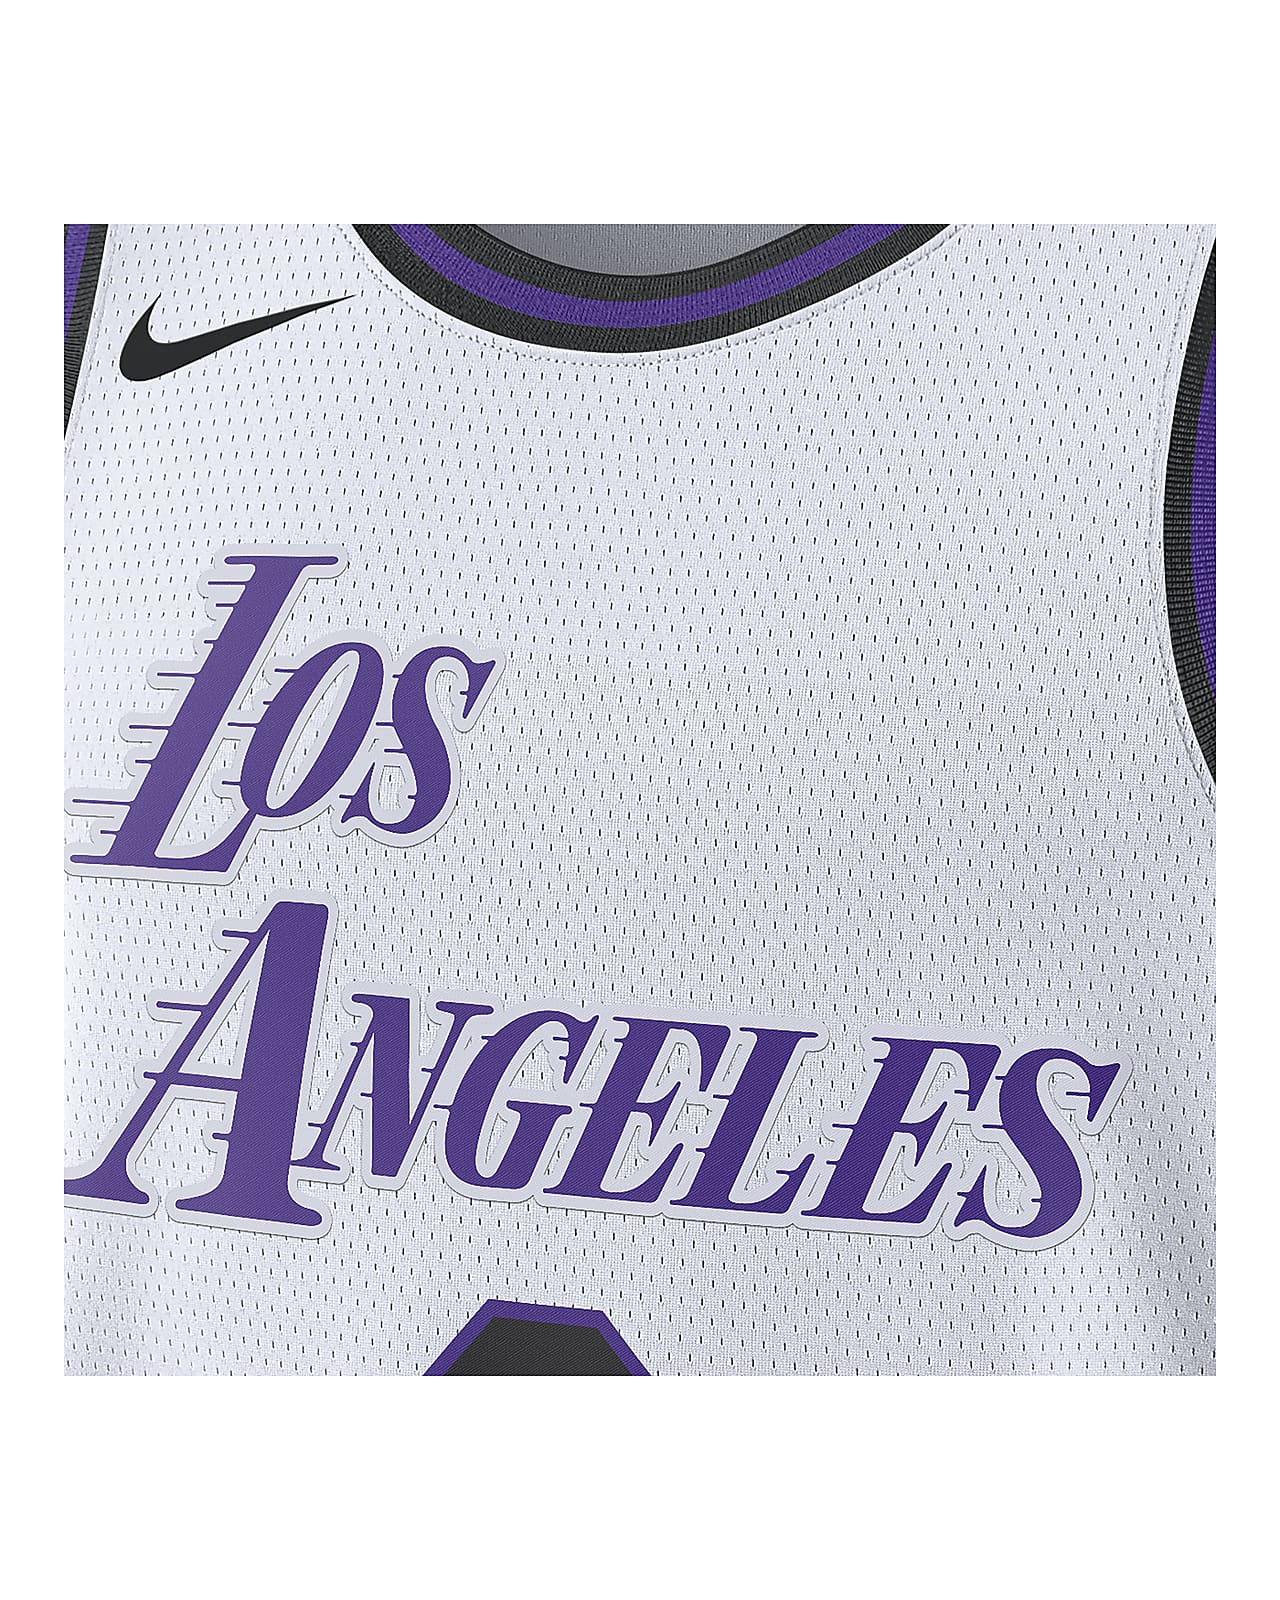 Nike Men's 2021-22 City Edition Los Angeles Lakers LeBron James #6